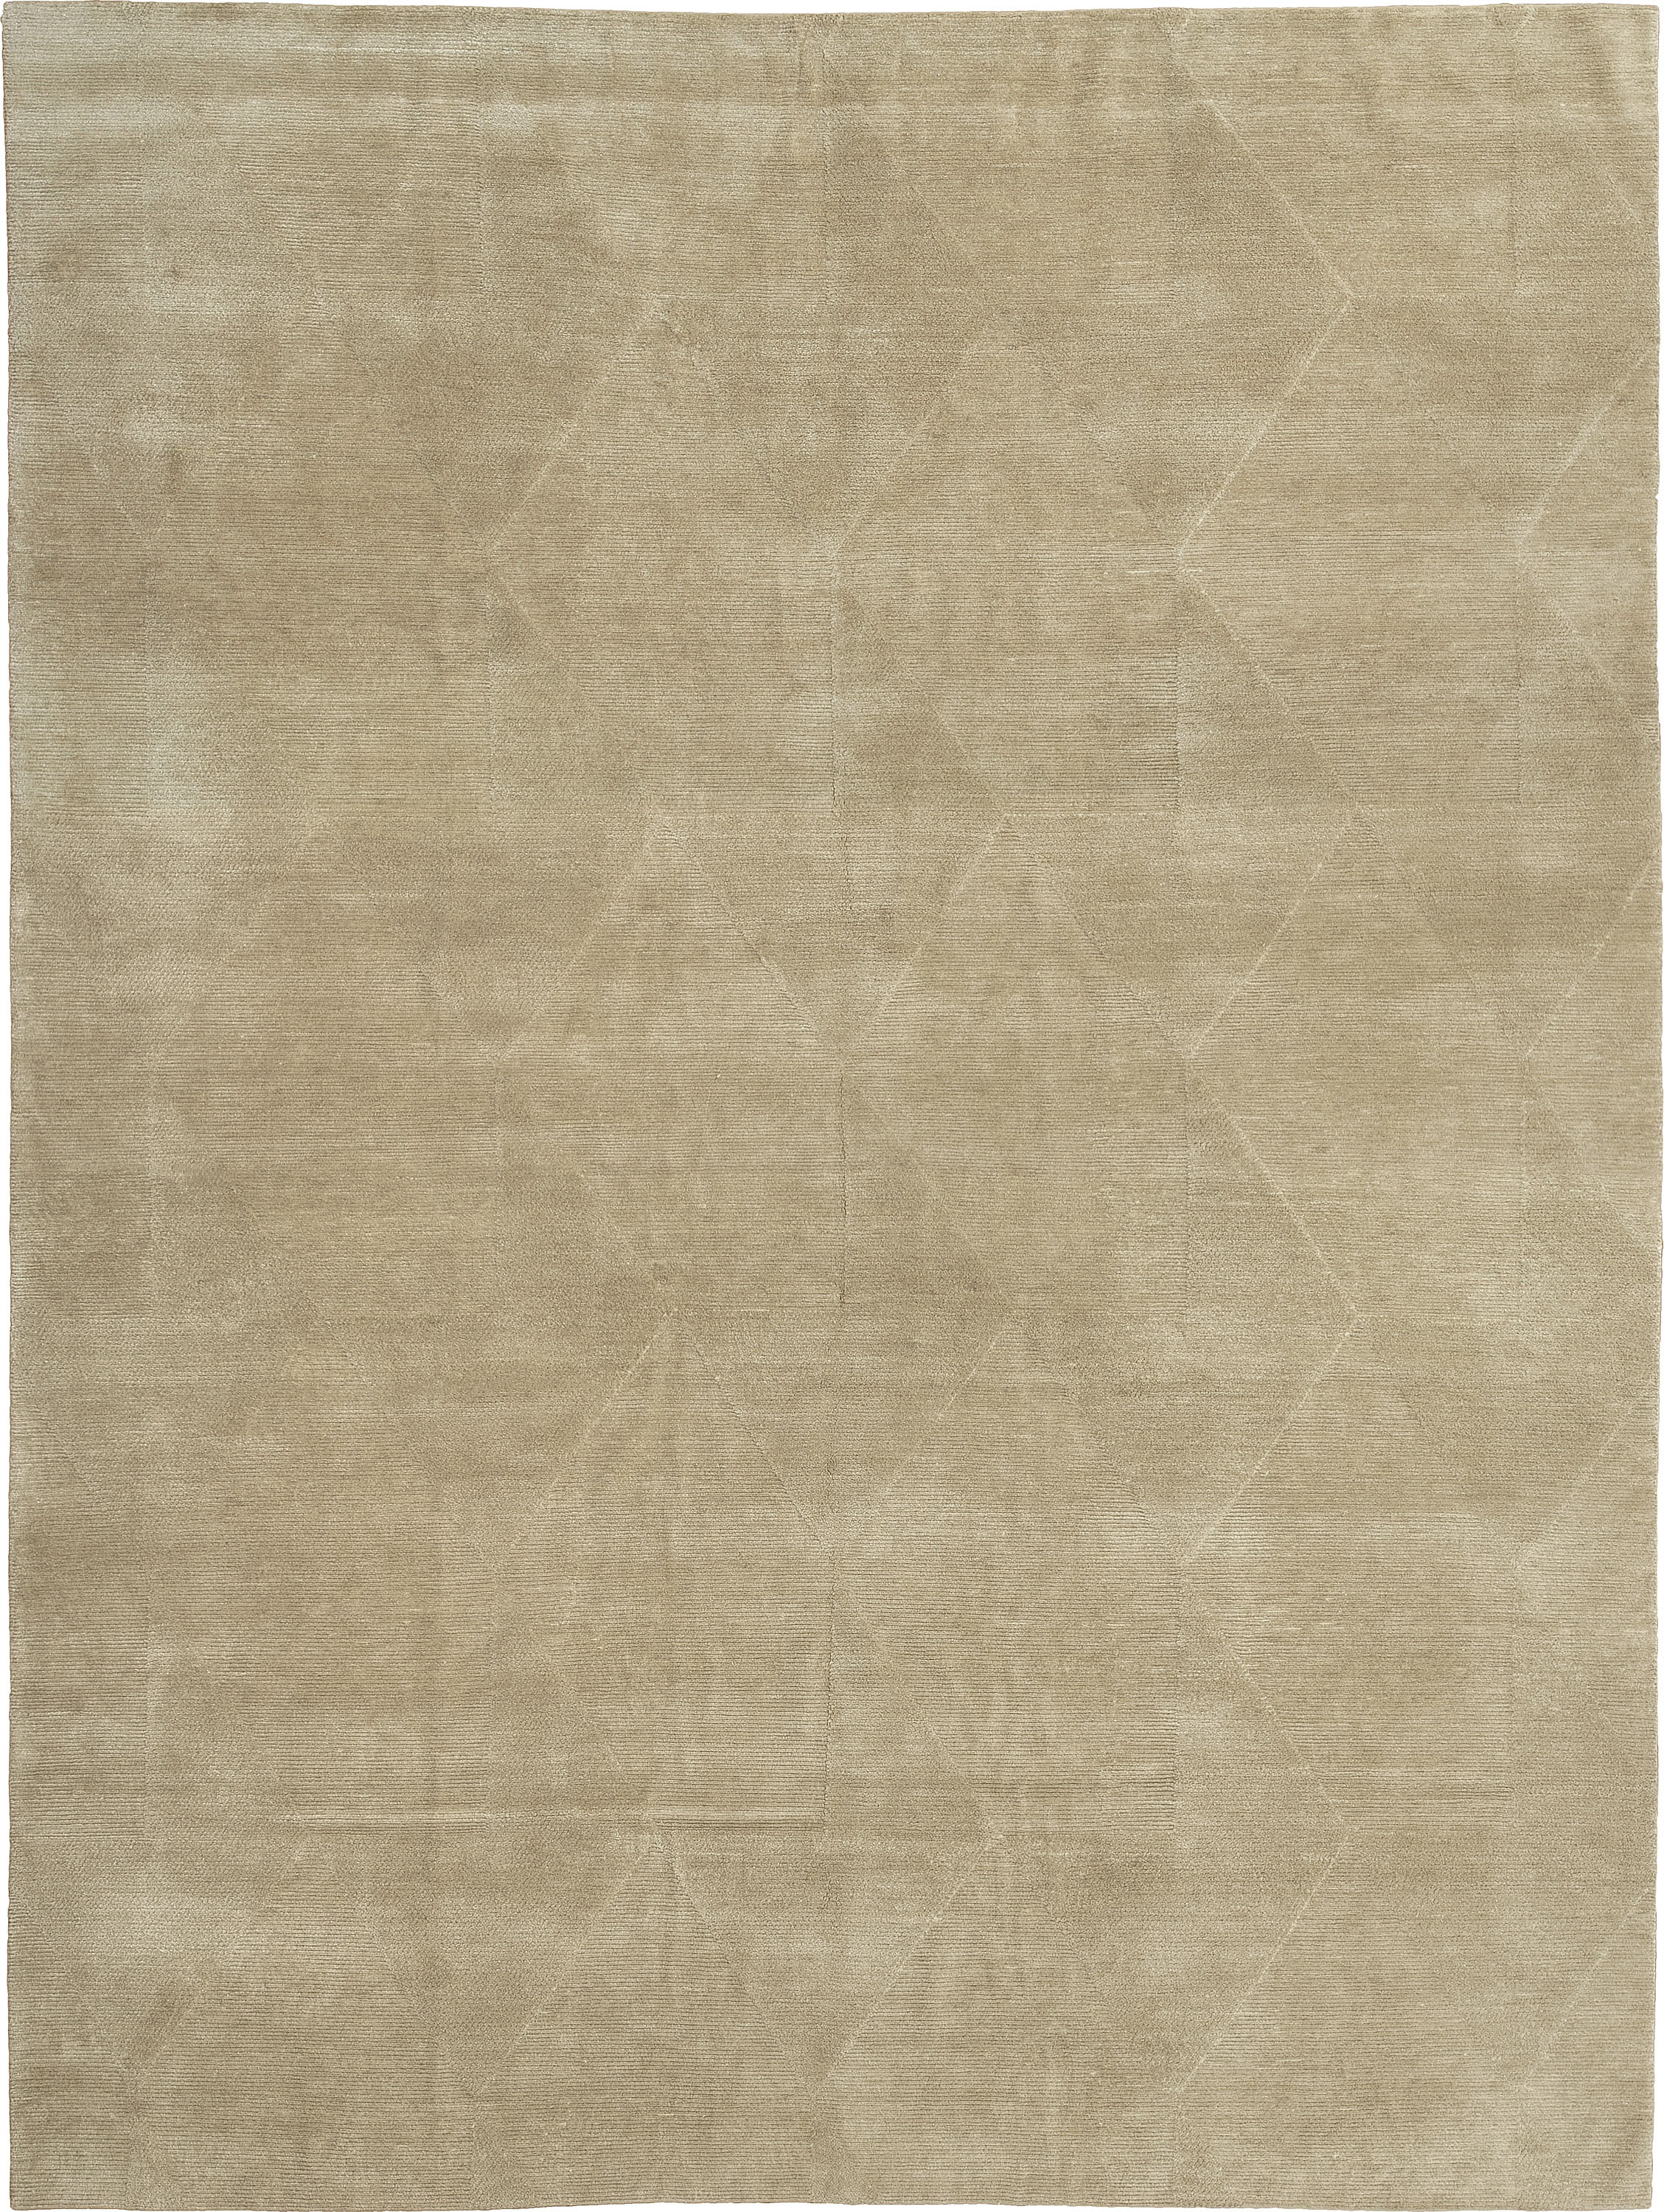 16905 Boggeri | Custom Modern & 20th Century Design Carpet | FJ Hakimian | Carpet Gallery in NYC